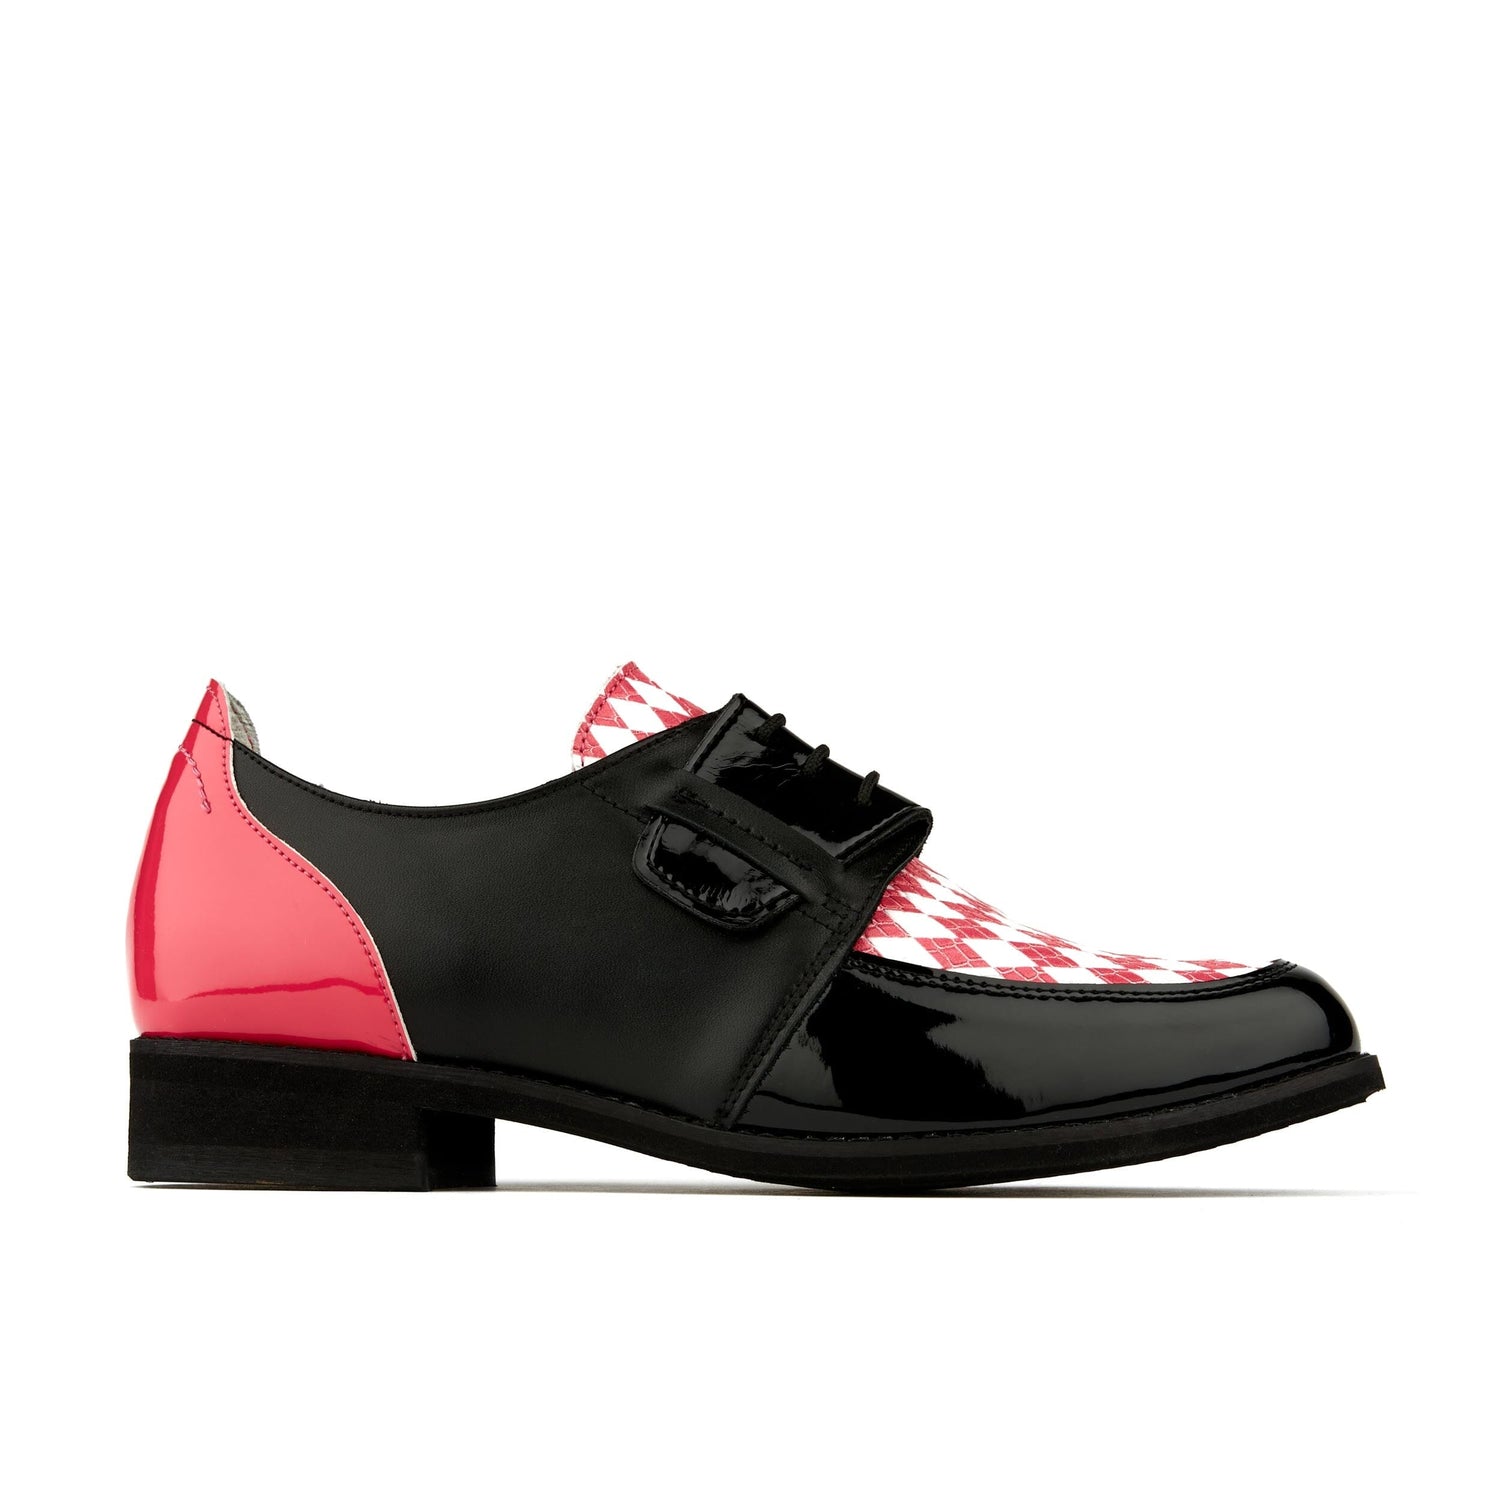 Madness - Black & Pink Womens Shoes Embassy London 